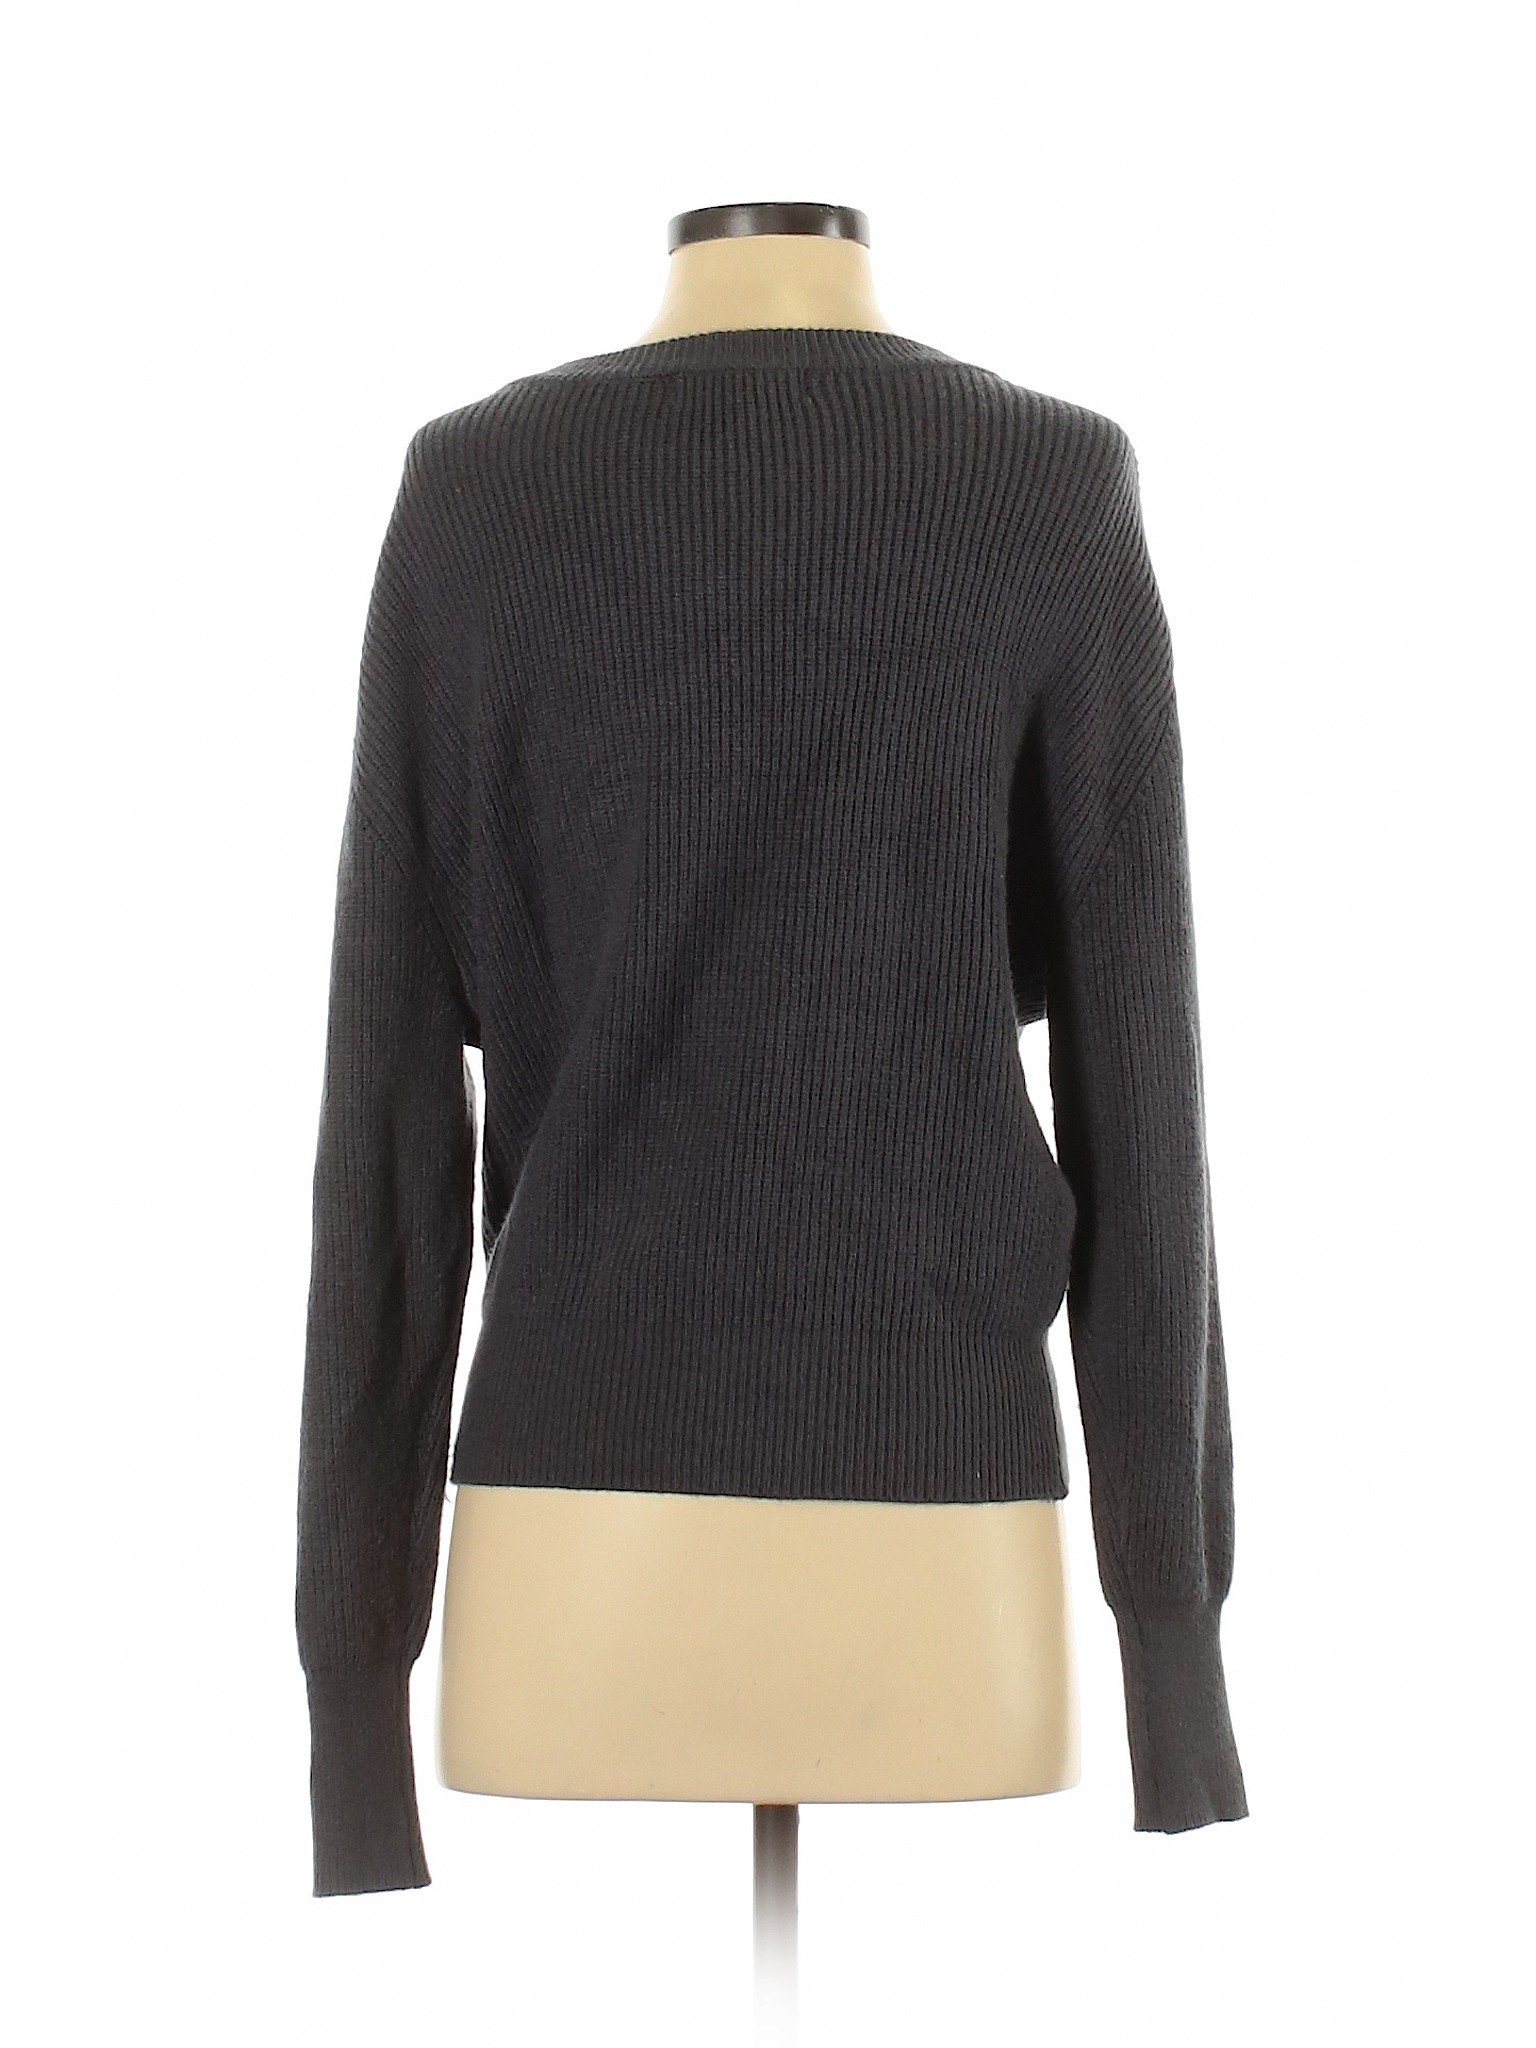 Philosophy Republic Clothing Women Gray Pullover Sweater S | eBay